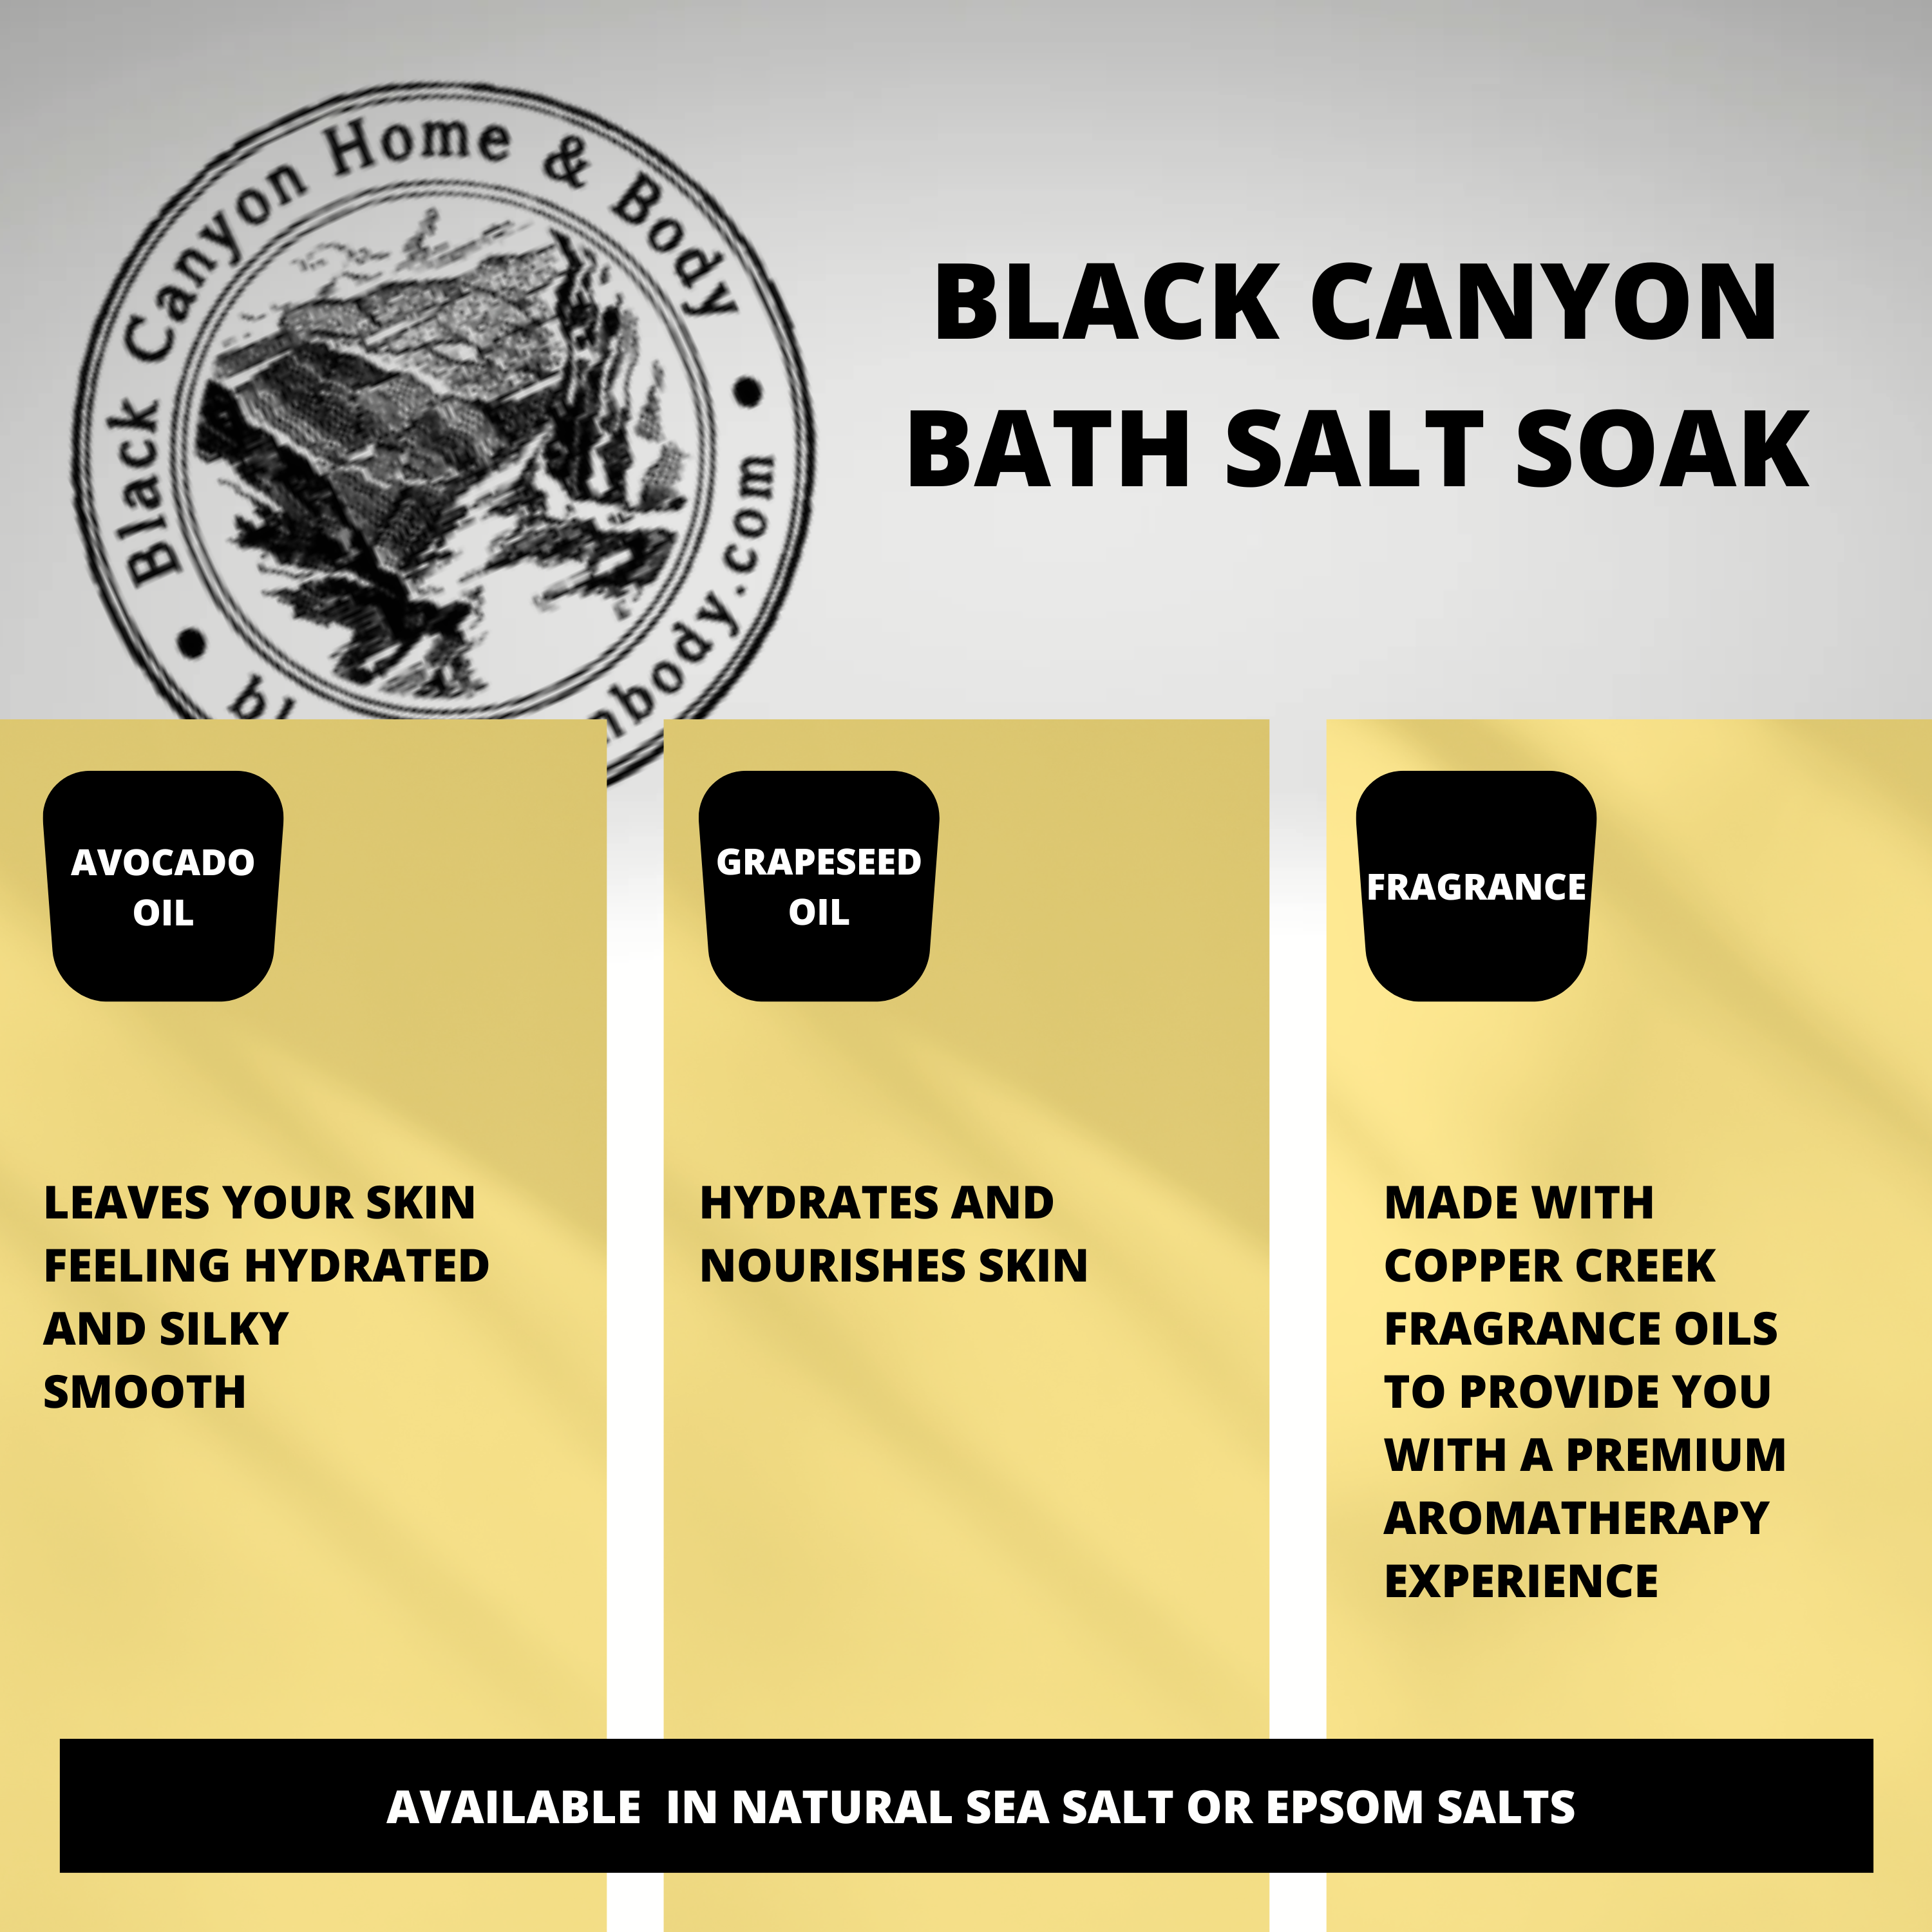 Black Canyon Vampires Breath Scented Sea Salt Bath Soak